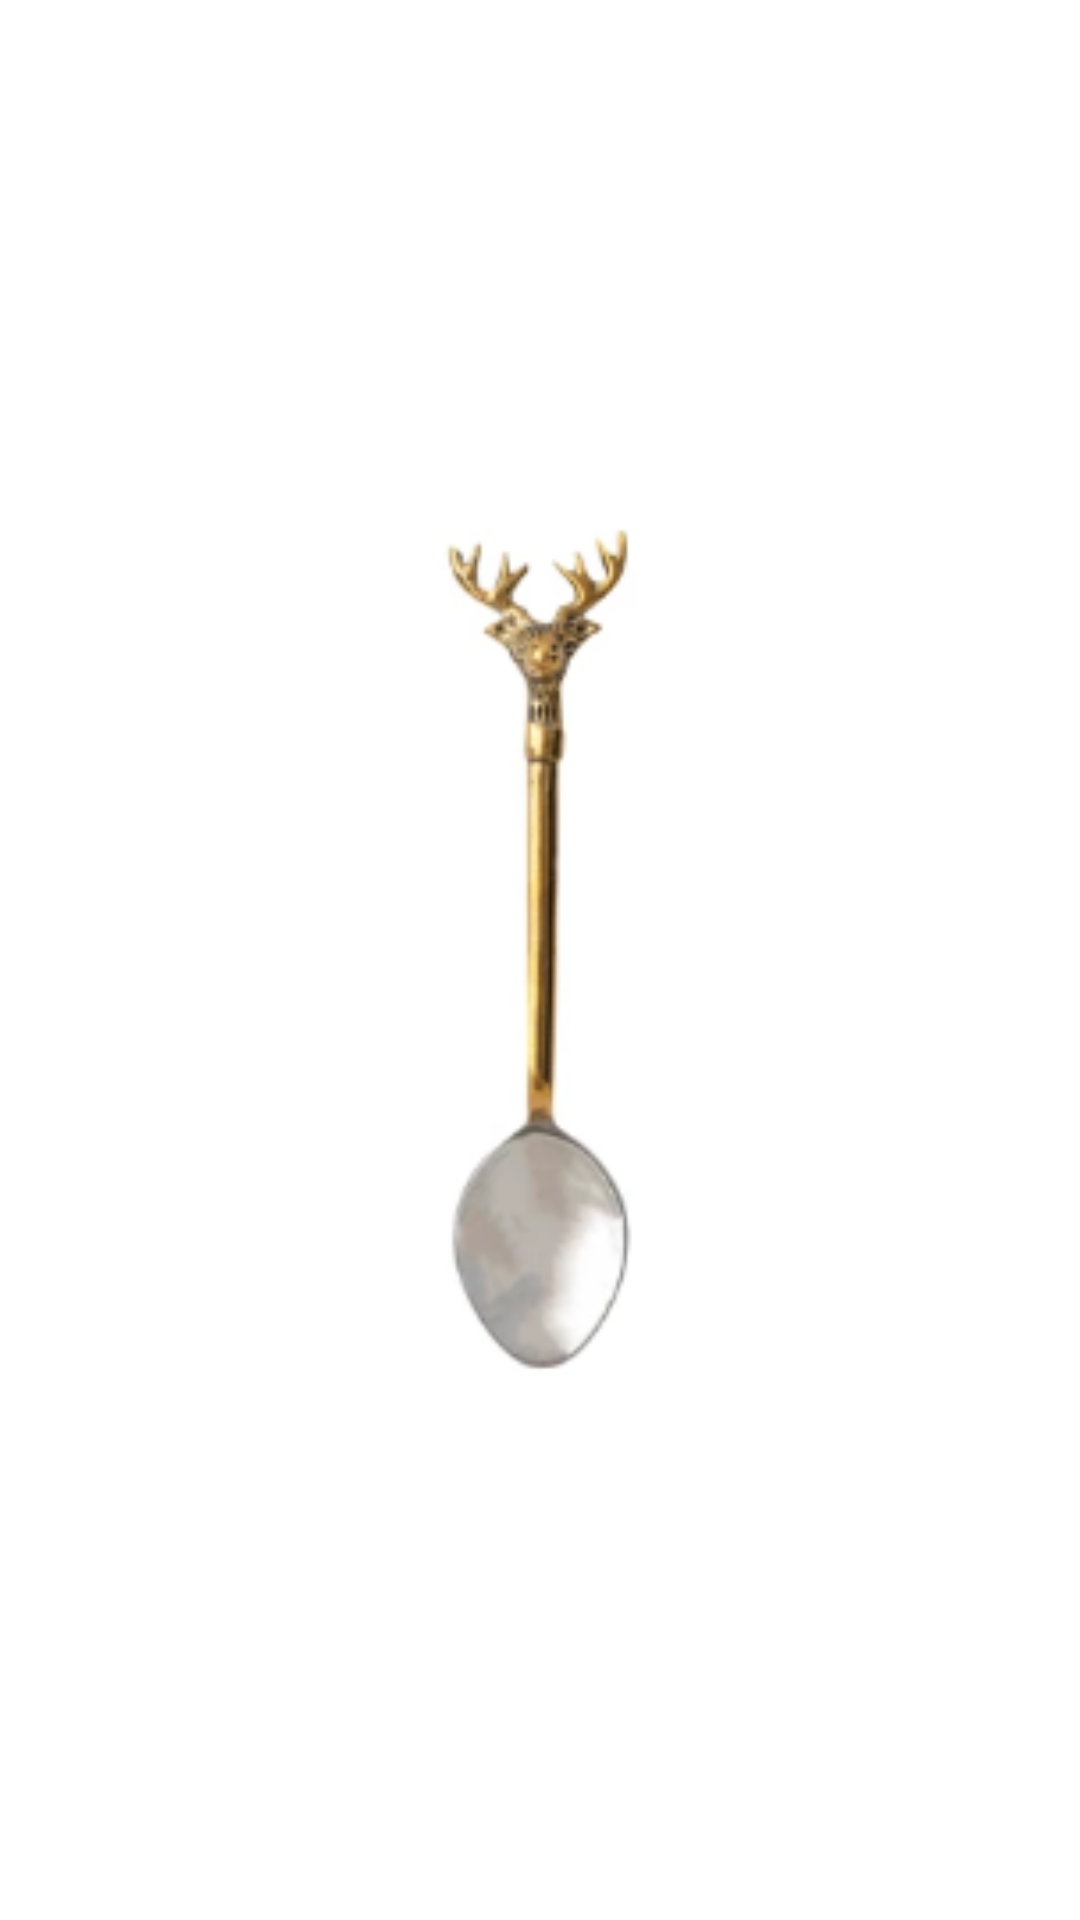 Gold Reindeer Spoon